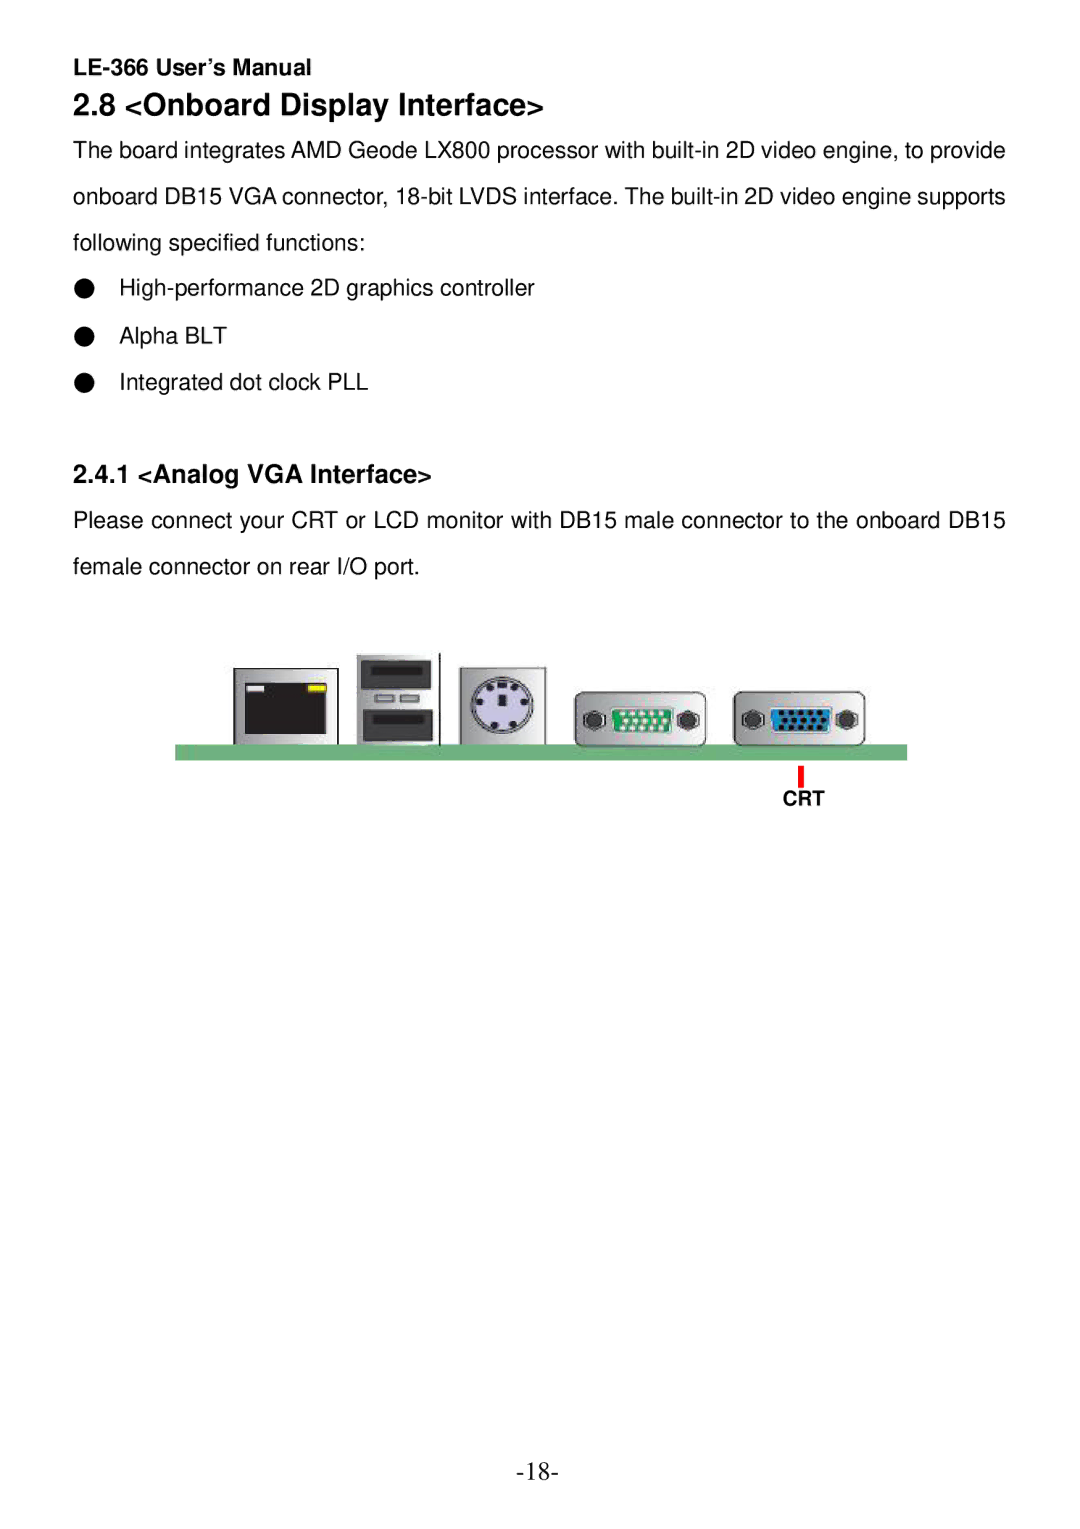 AMD LE-366 user manual Onboard Display Interface, Analog VGA Interface 